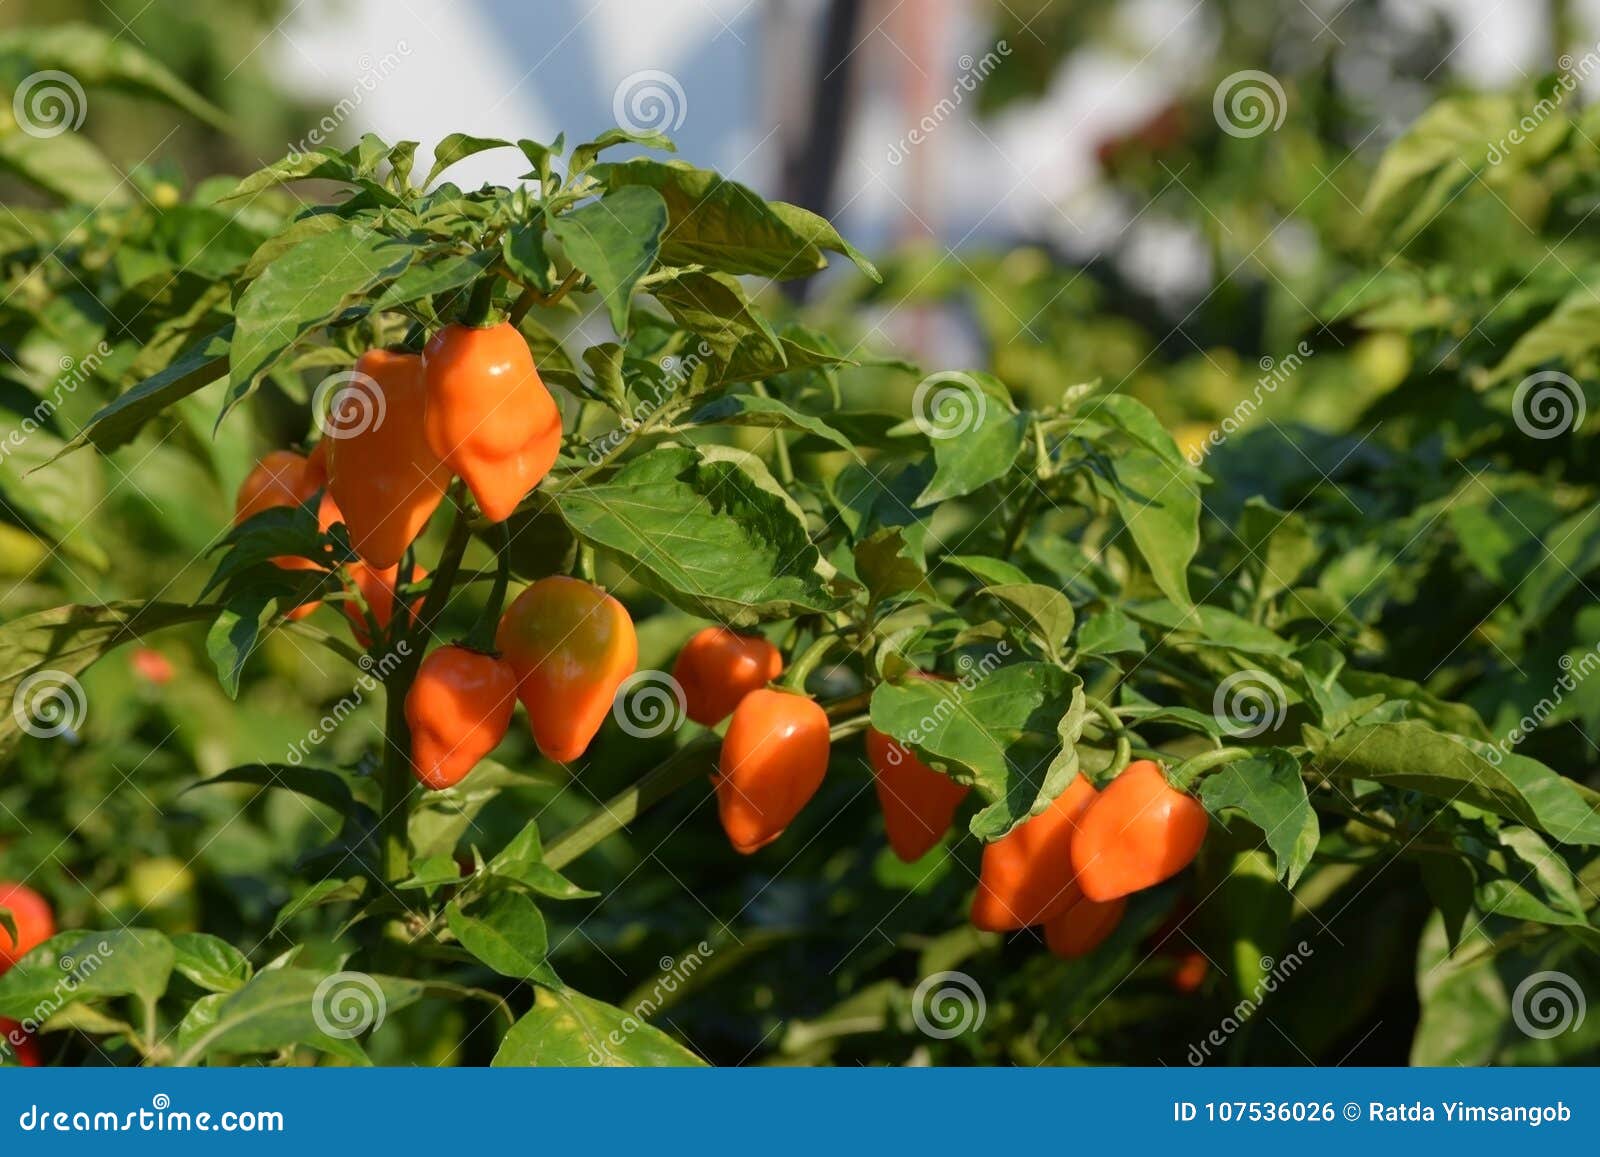 hot habanero orange peppers on the plants